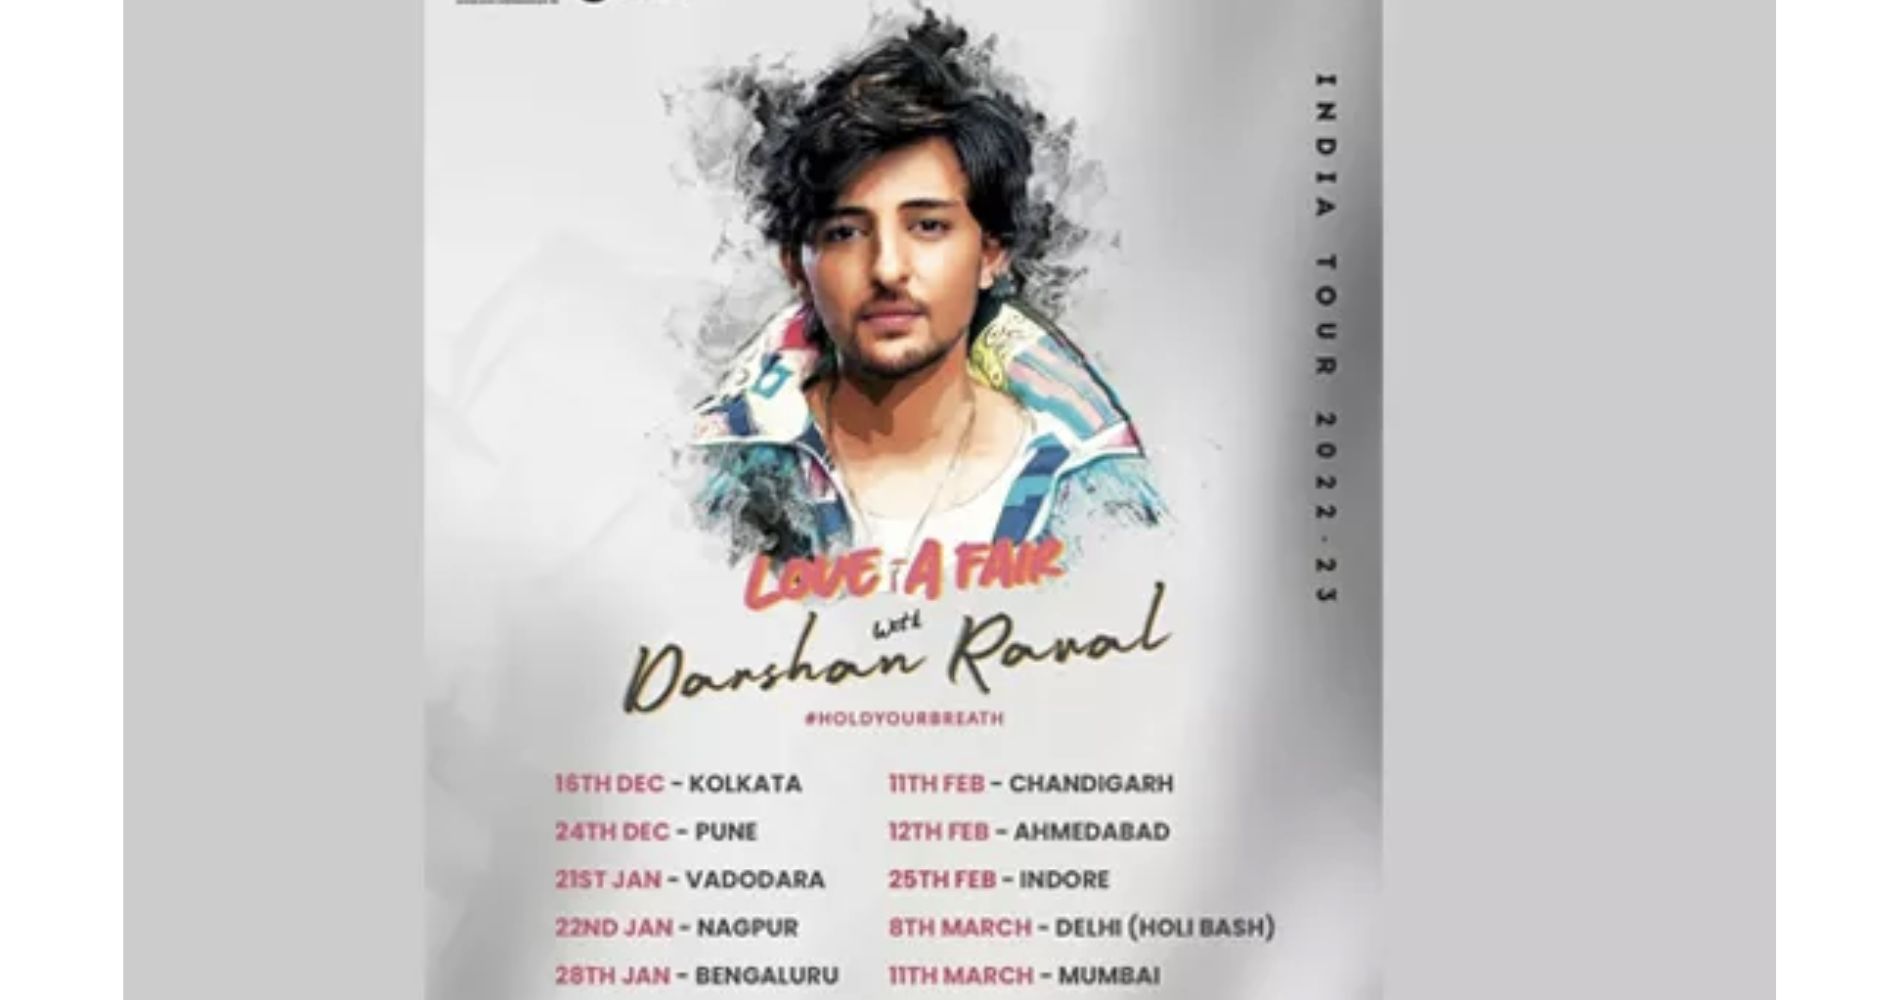 Bollywood singing sensation Darshan Raval has announced his ten-city tour